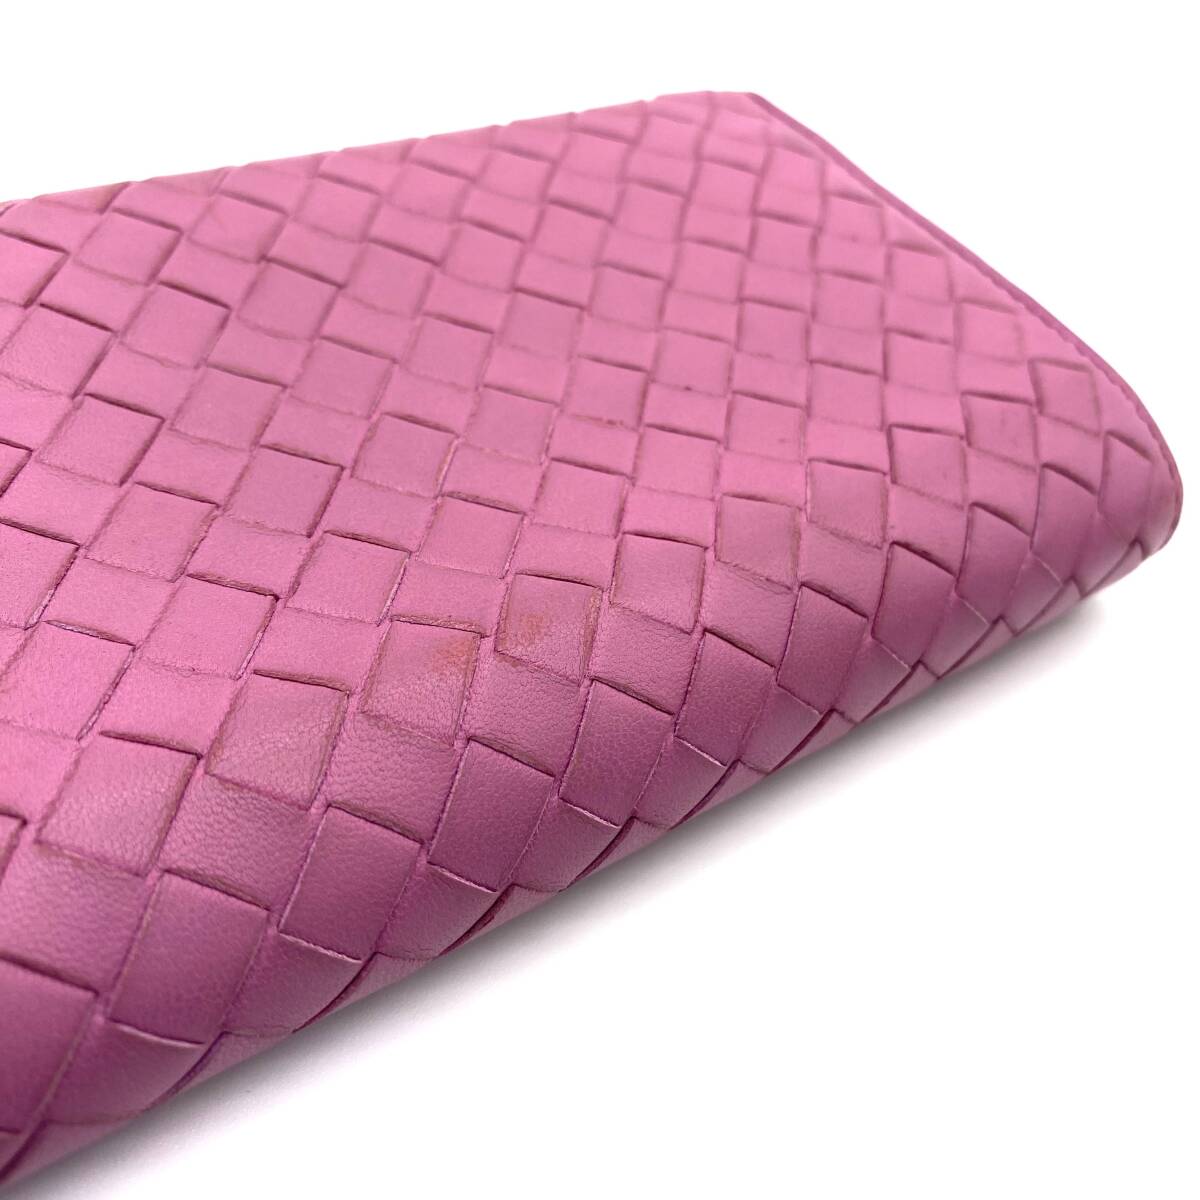 Bottega Veneta Intrecciato Round Zip Wallet Pink ボッテガ イントレチャート ラウンドジッパー 財布